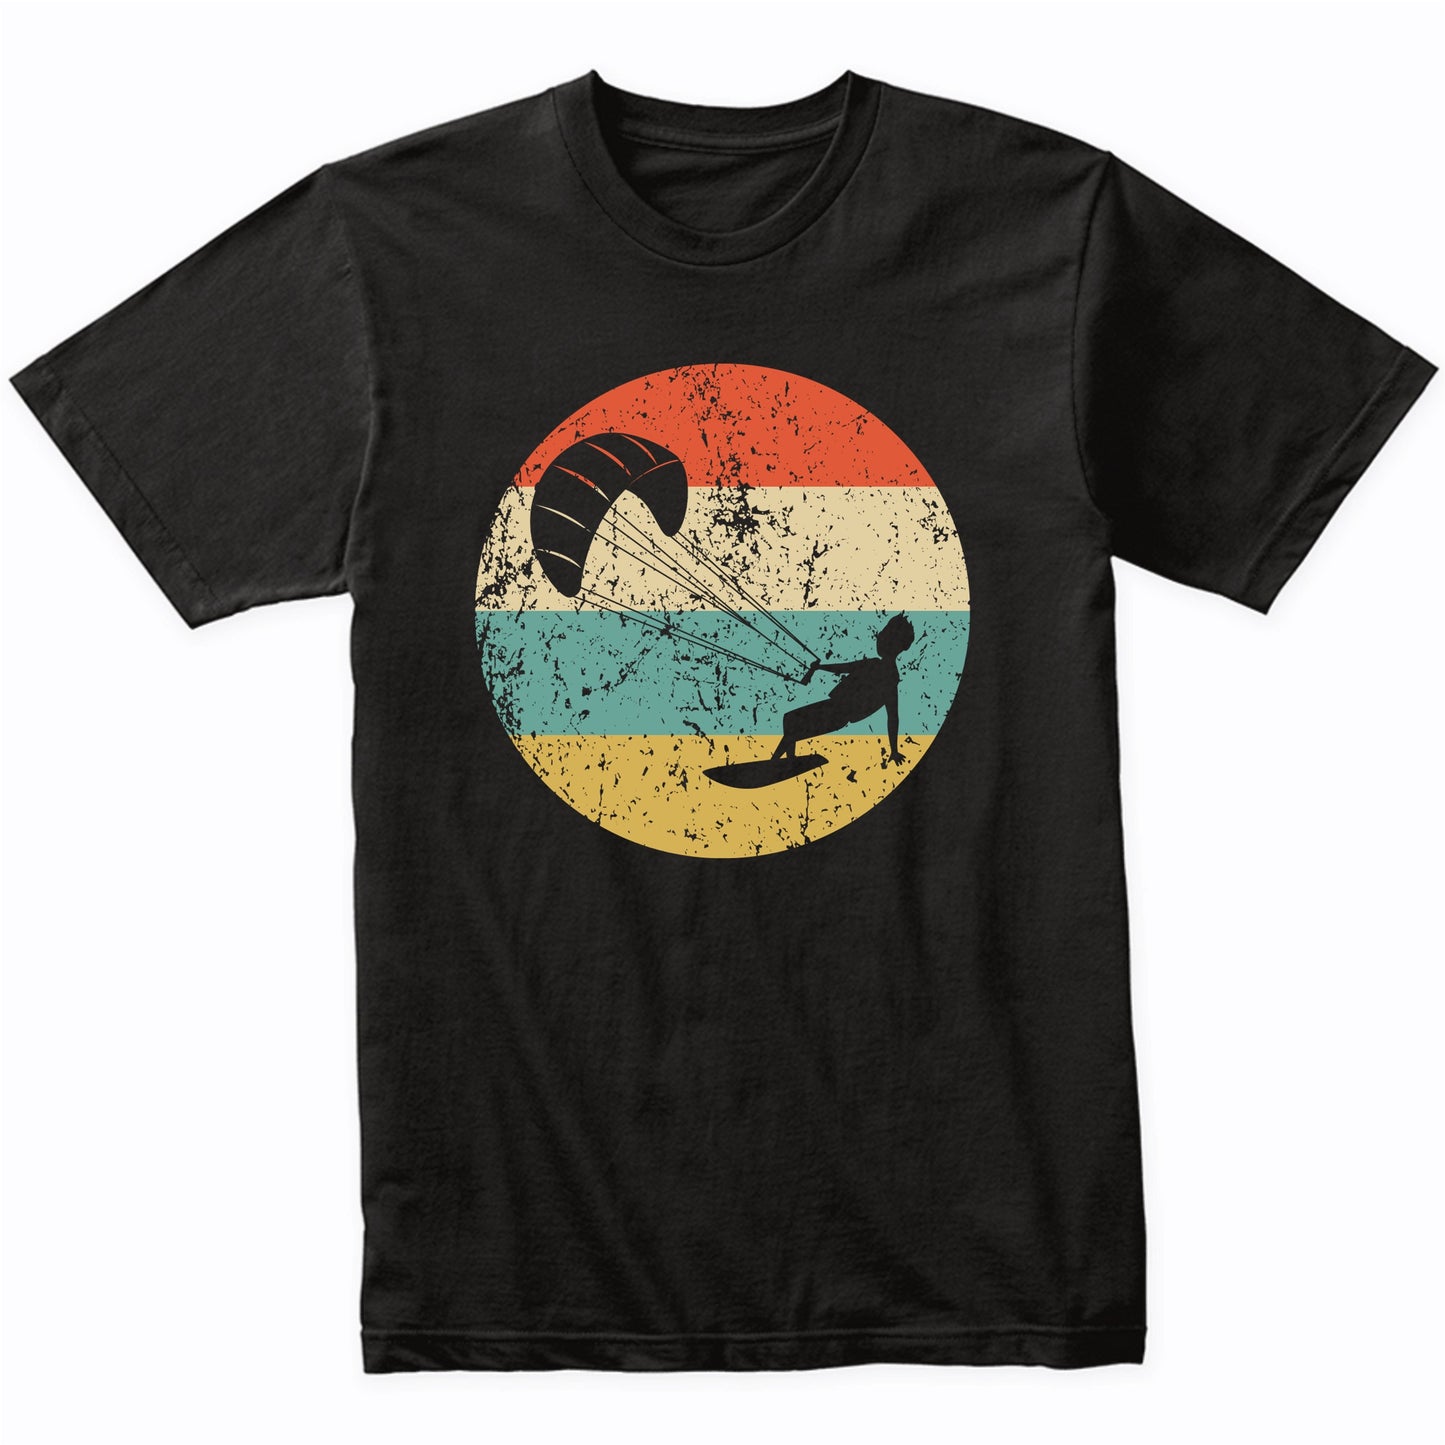 Kite Surfing Shirt - Vintage Retro Kite Surfer T-Shirt